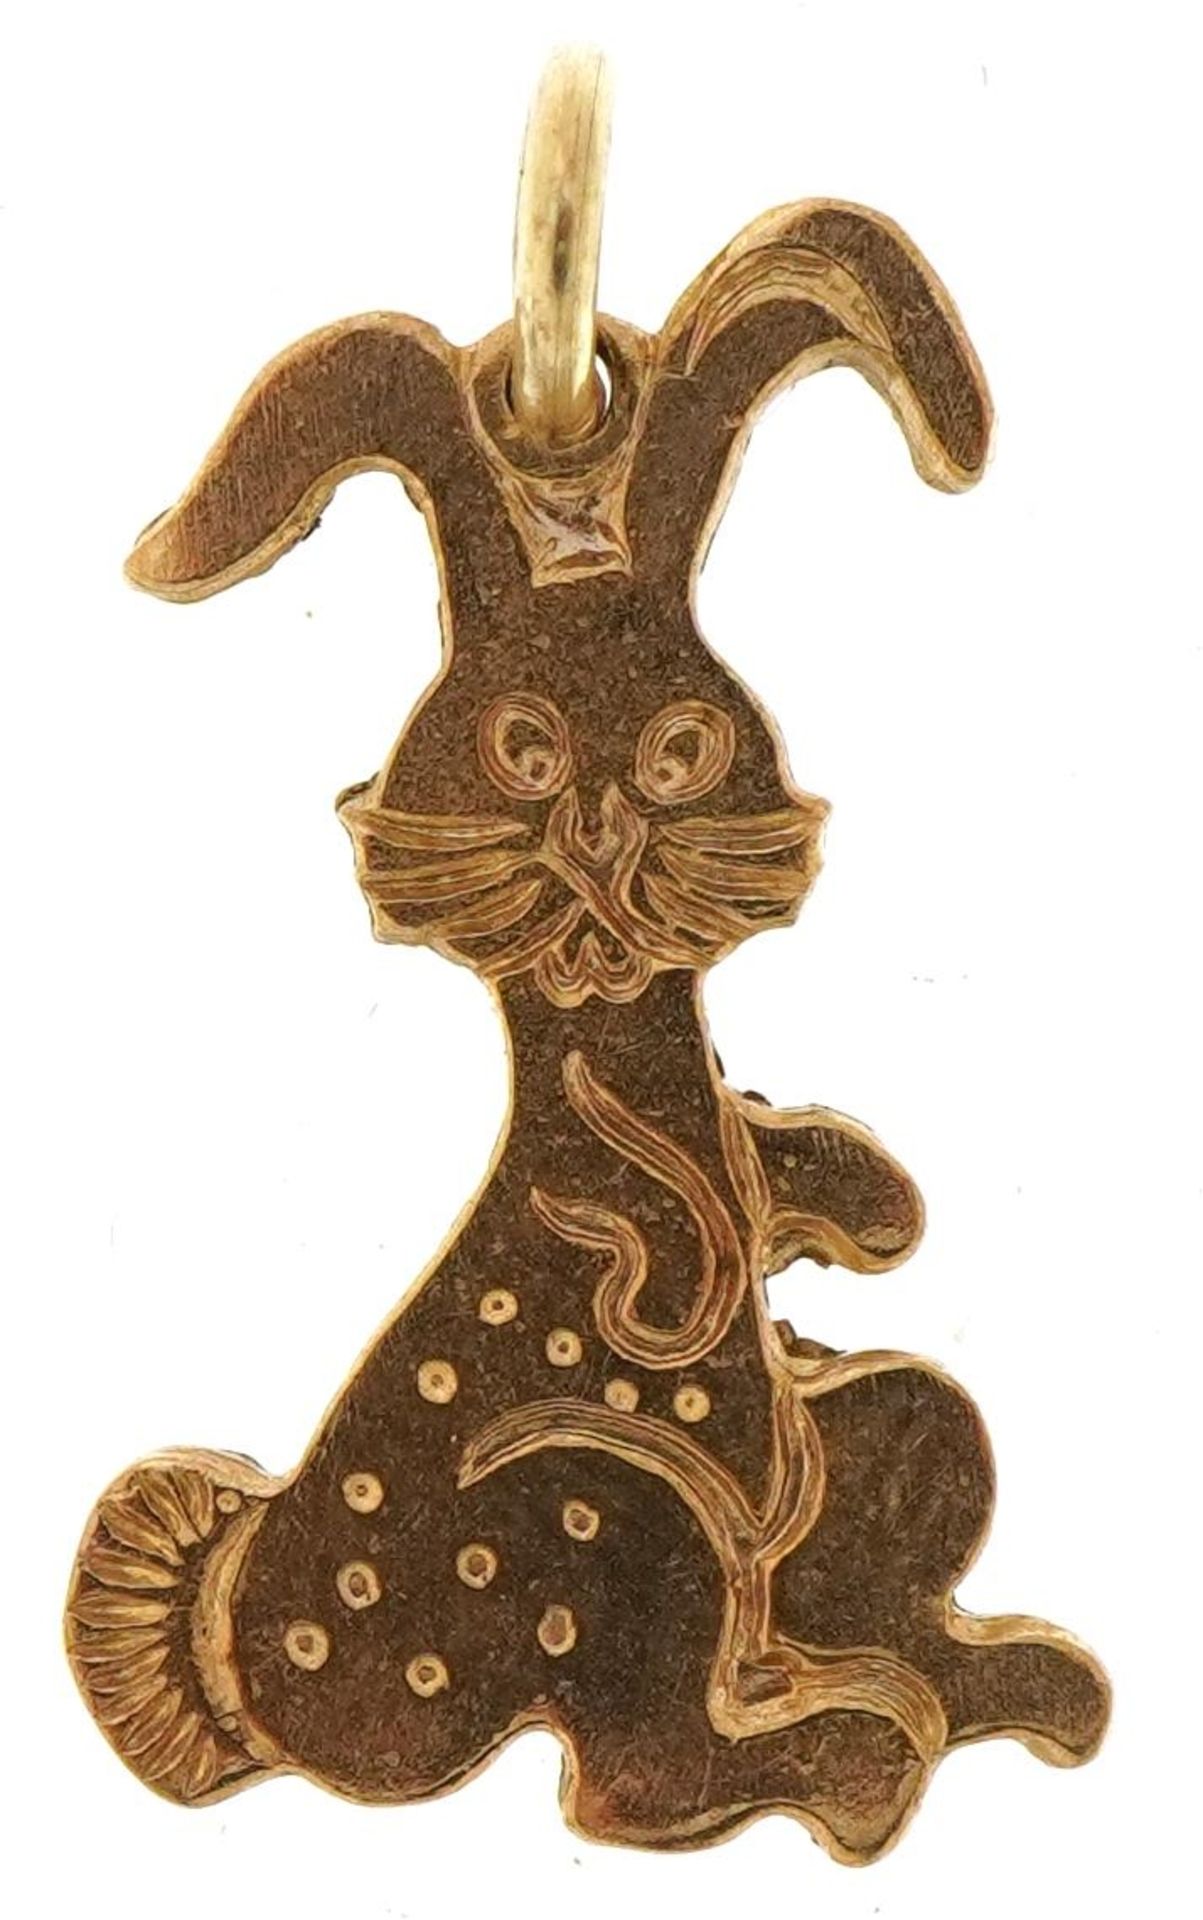 9ct gold stylised rabbit charm, 1.9cm high, 1.2g